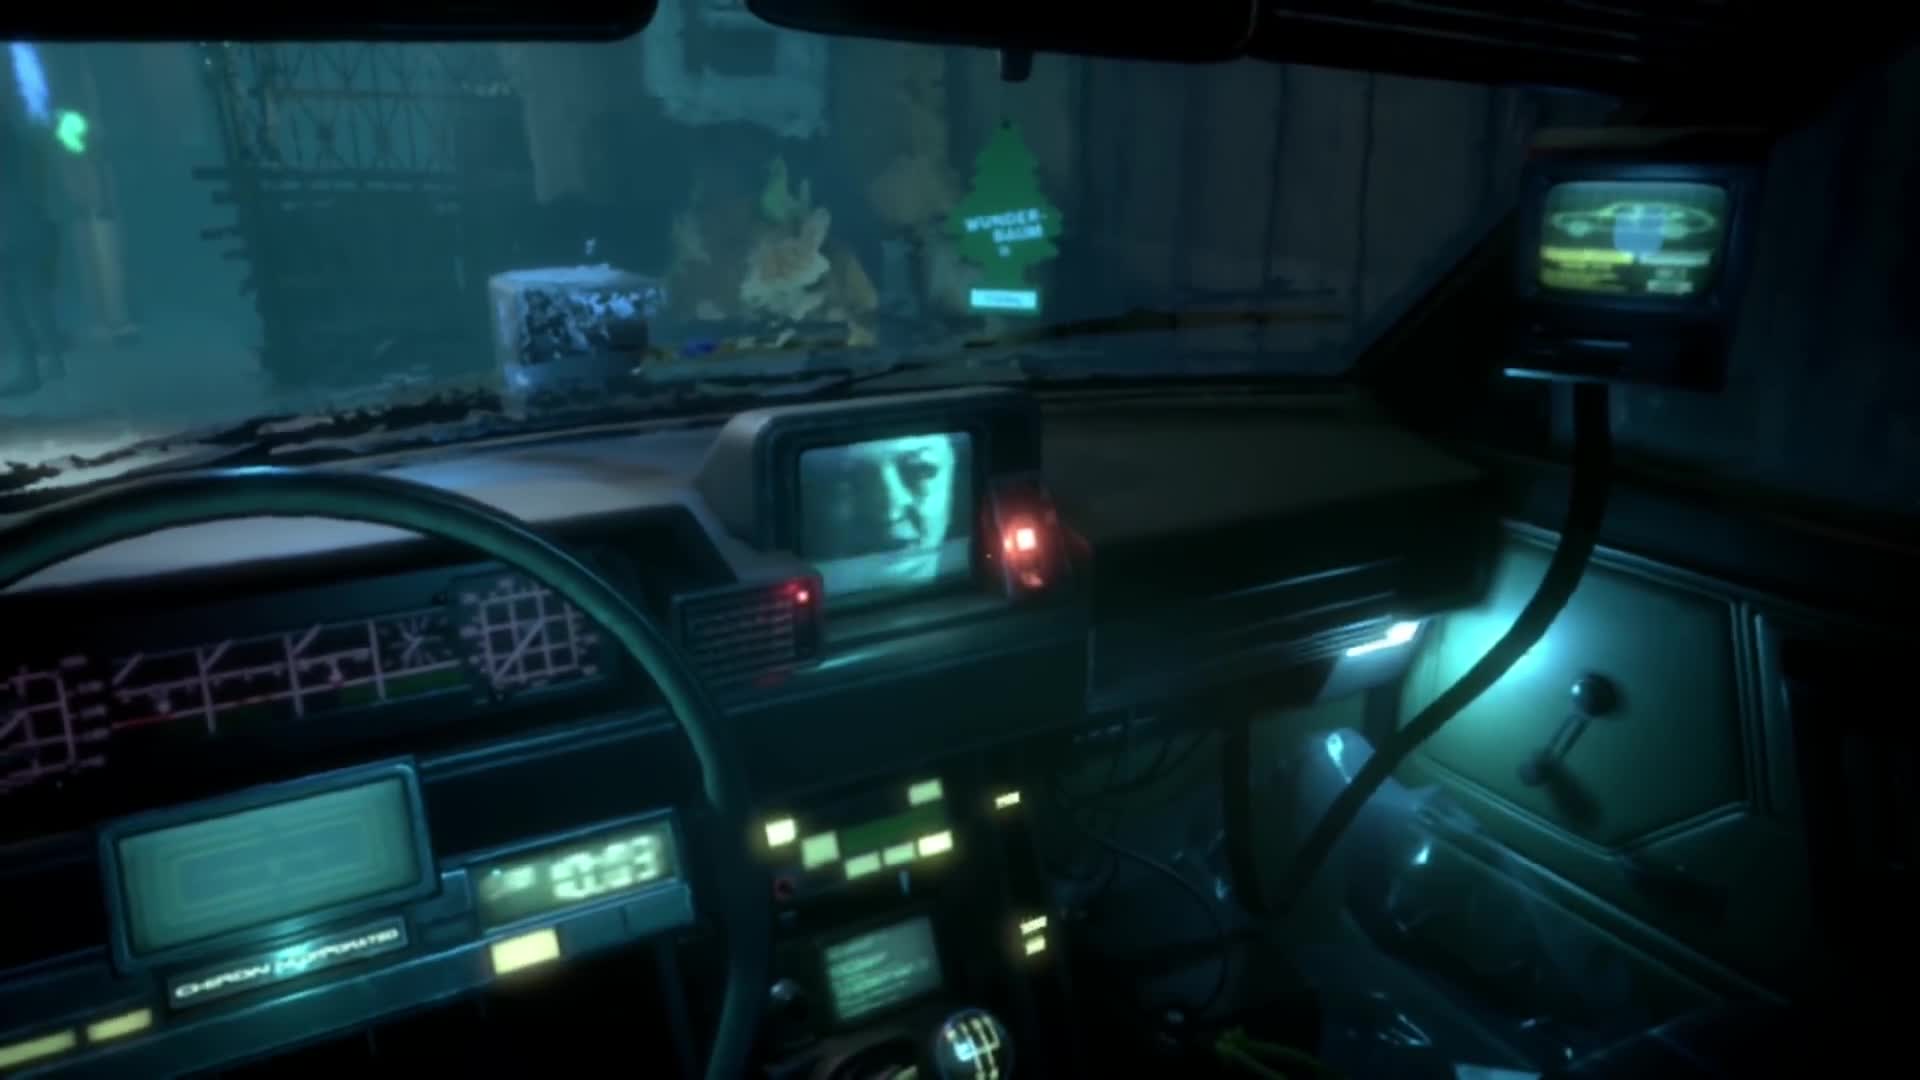 Switch verzia kyberpunkovho titulu Observer ukazuje svoj gameplay